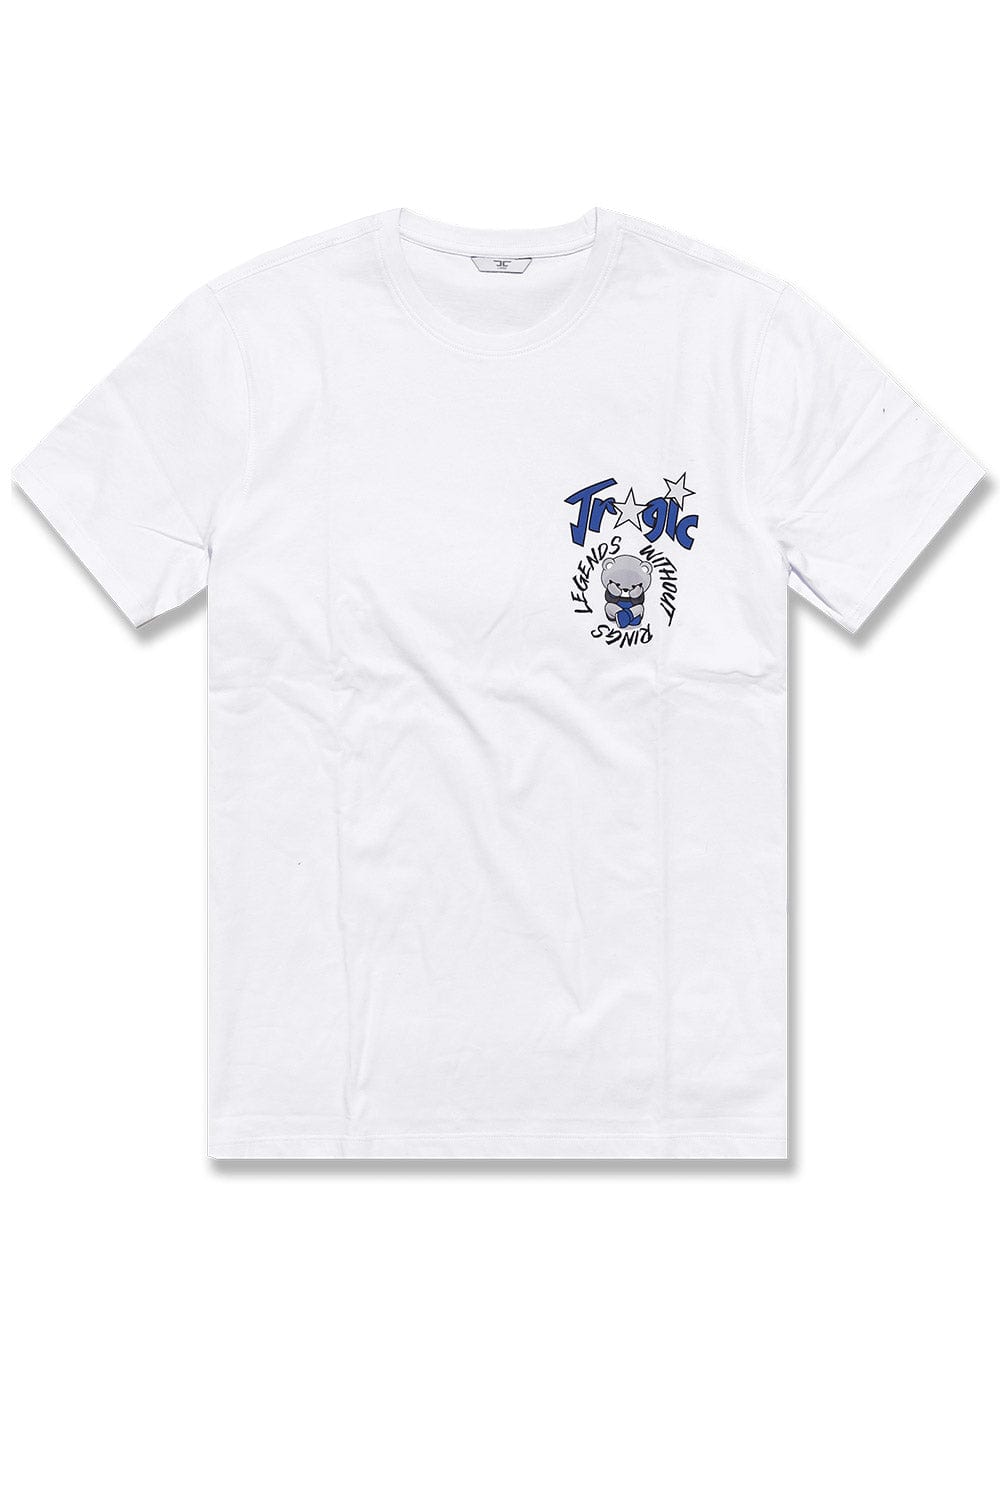 Jordan Craig Tragic T-Shirt (White) S / White